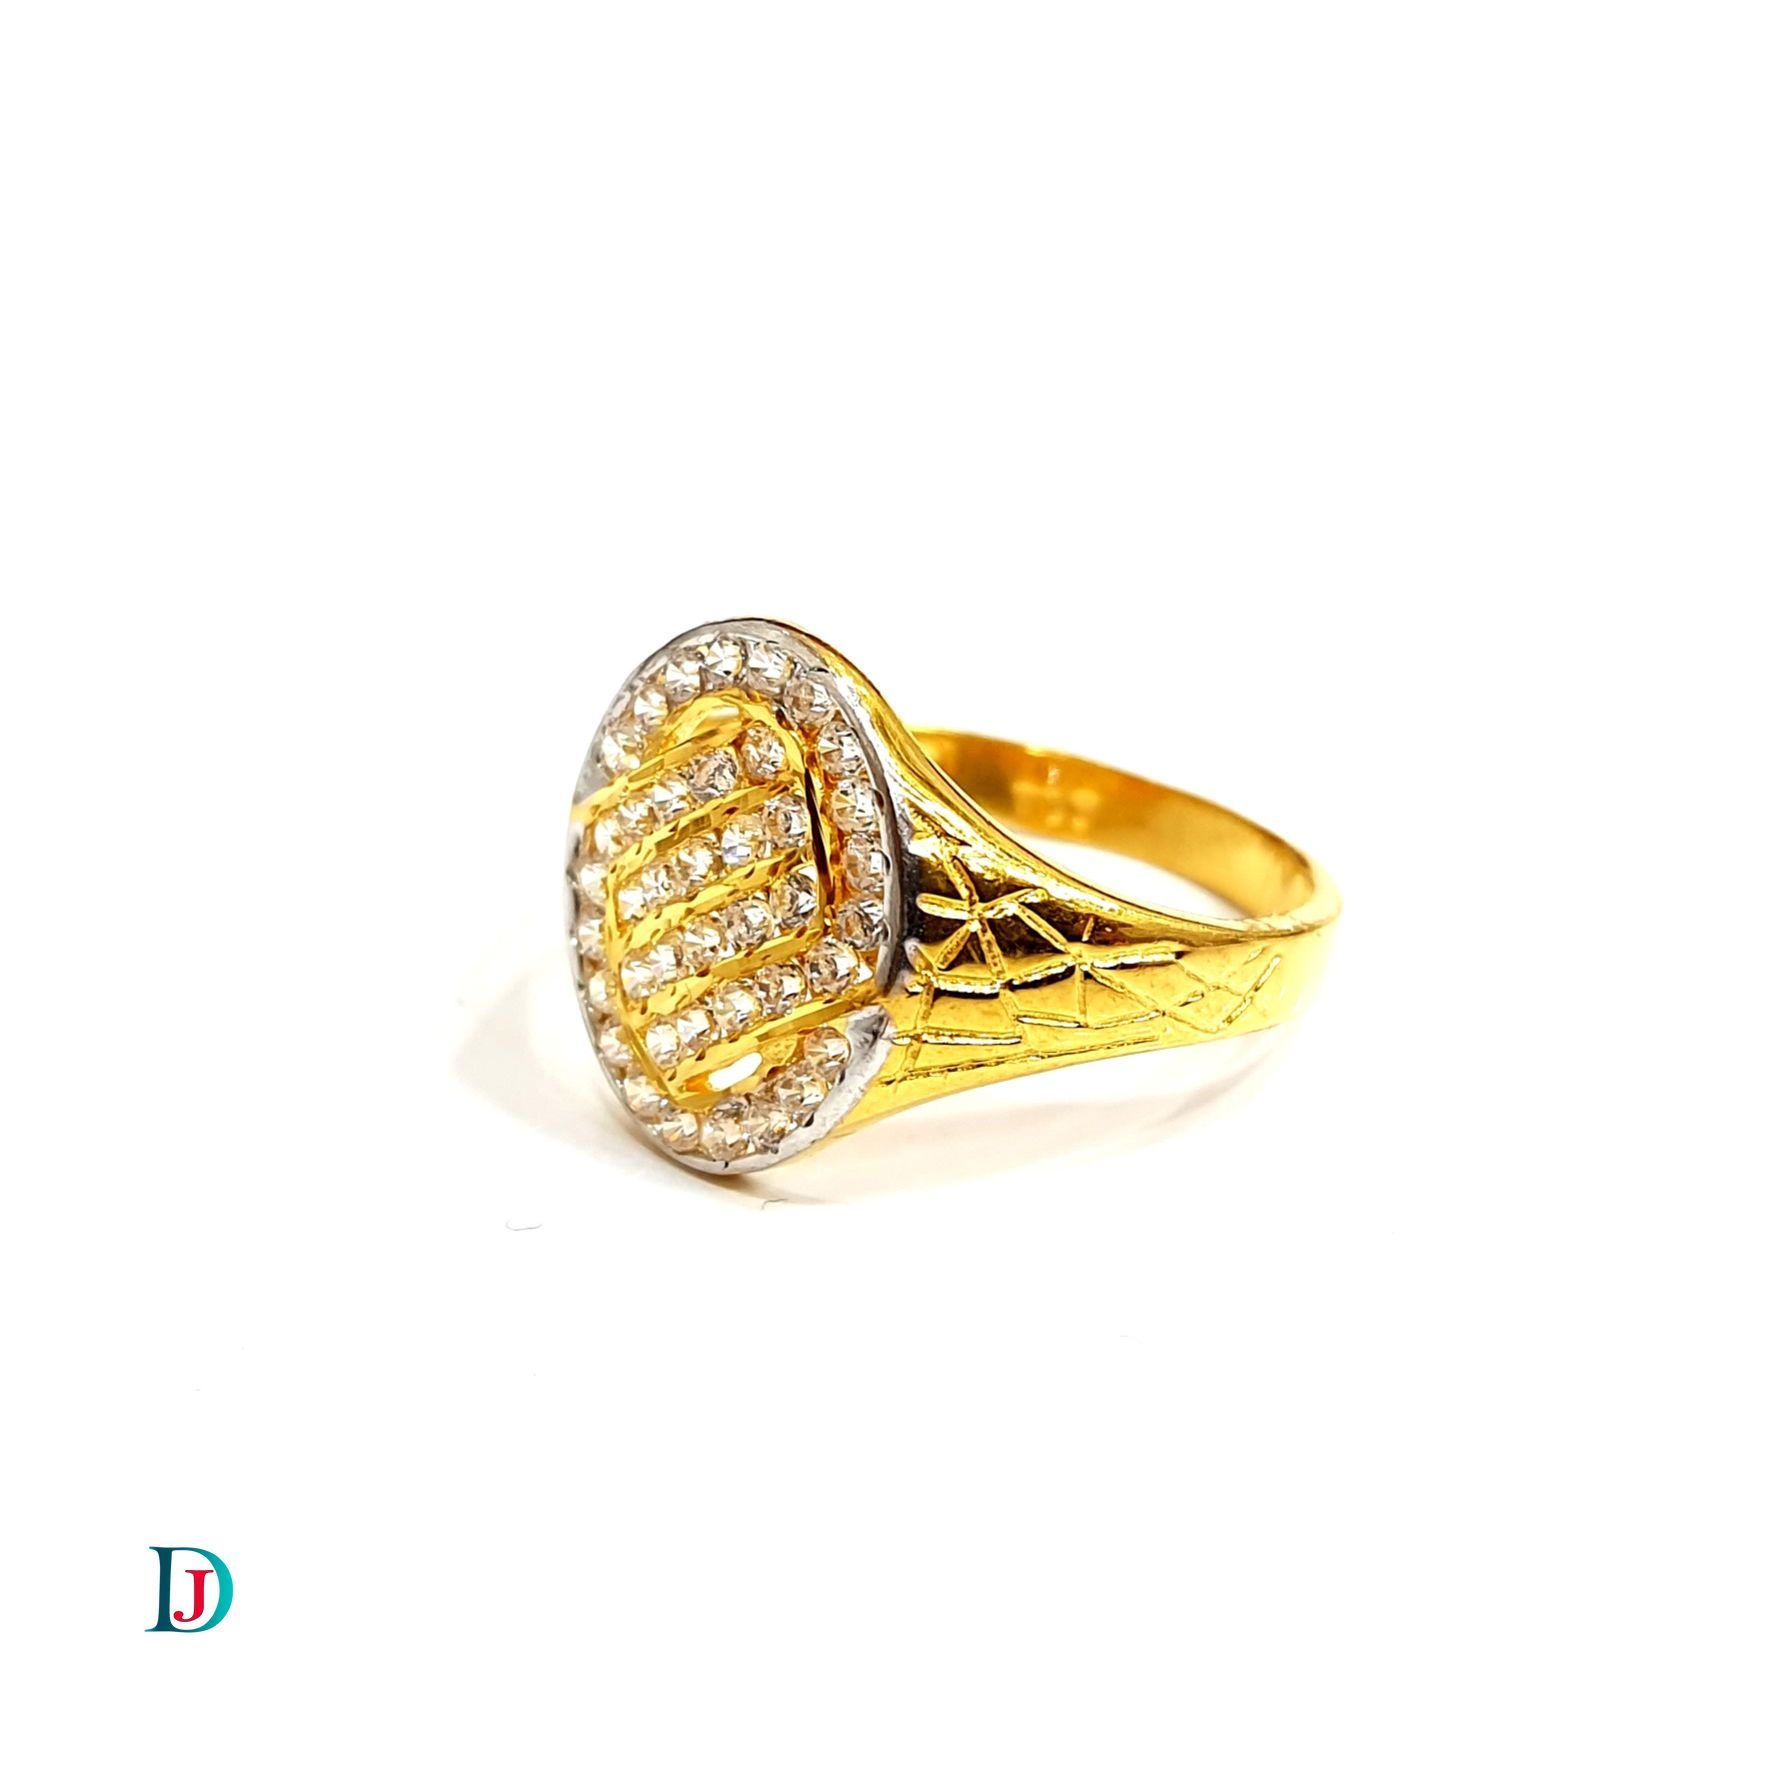 Buy Gold Rings for Women by Jyona Online | Ajio.com